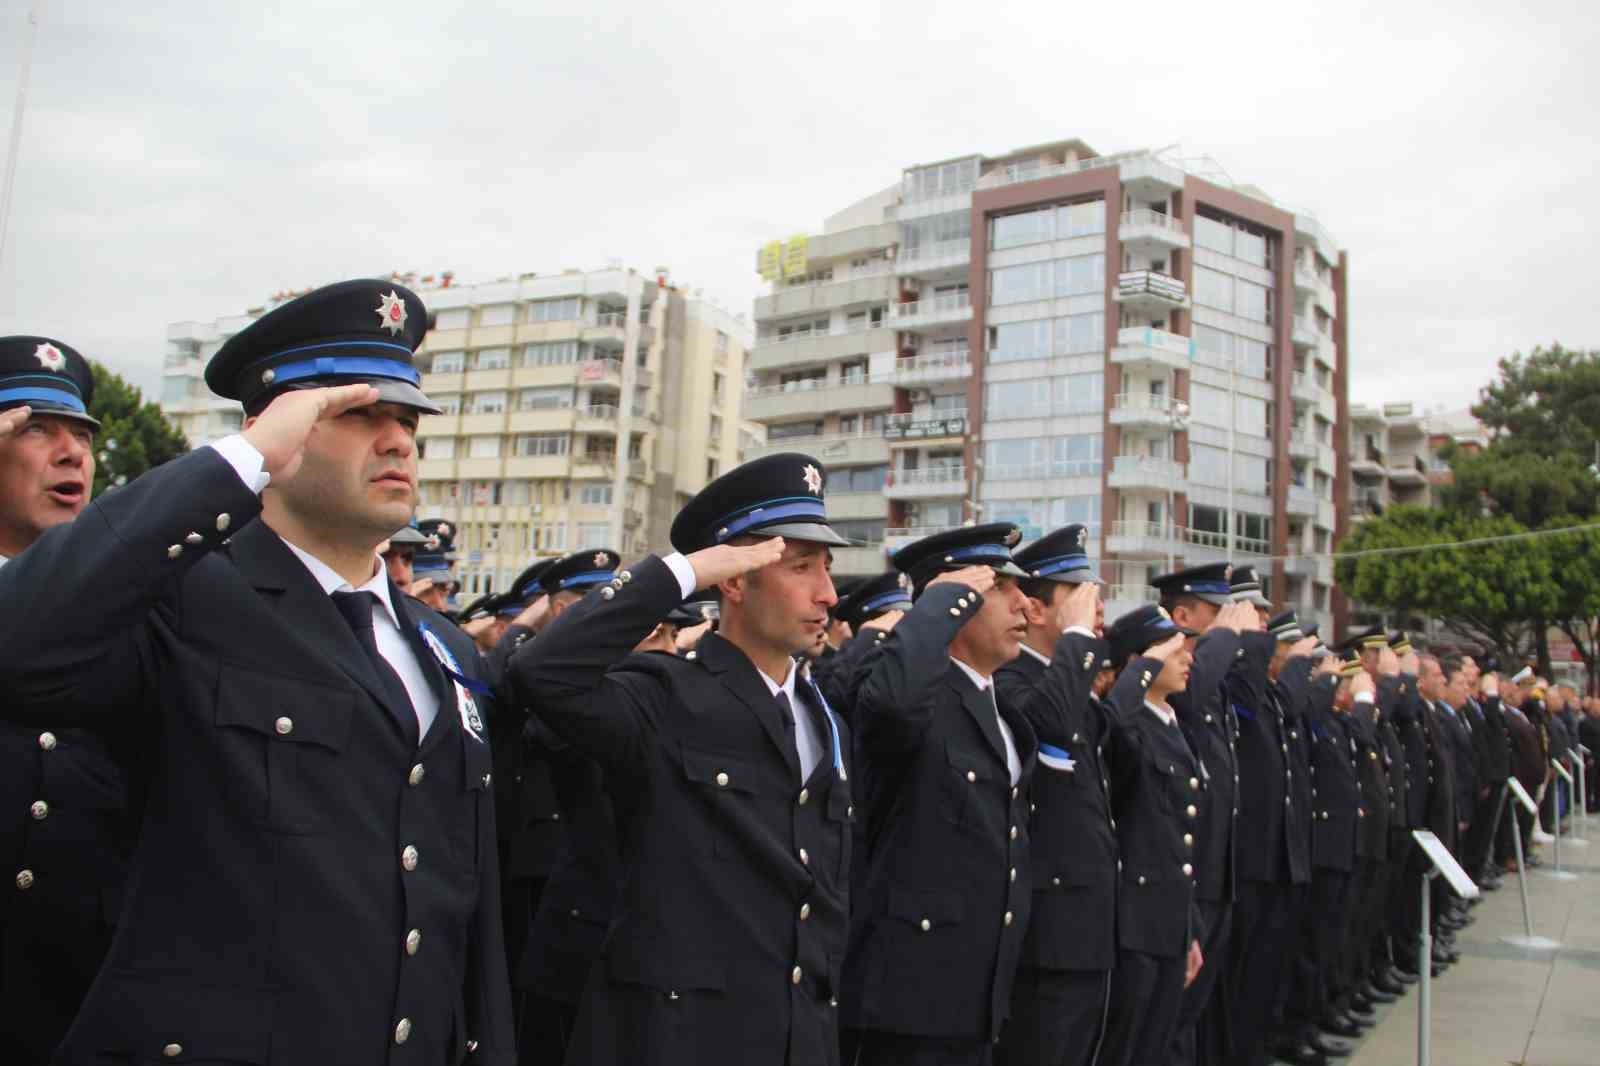 2023/04/turk-polis-teskilati-yeni-yasini-cumhuriyet-meydaninda-kutladi-20230410AW86-5.jpg